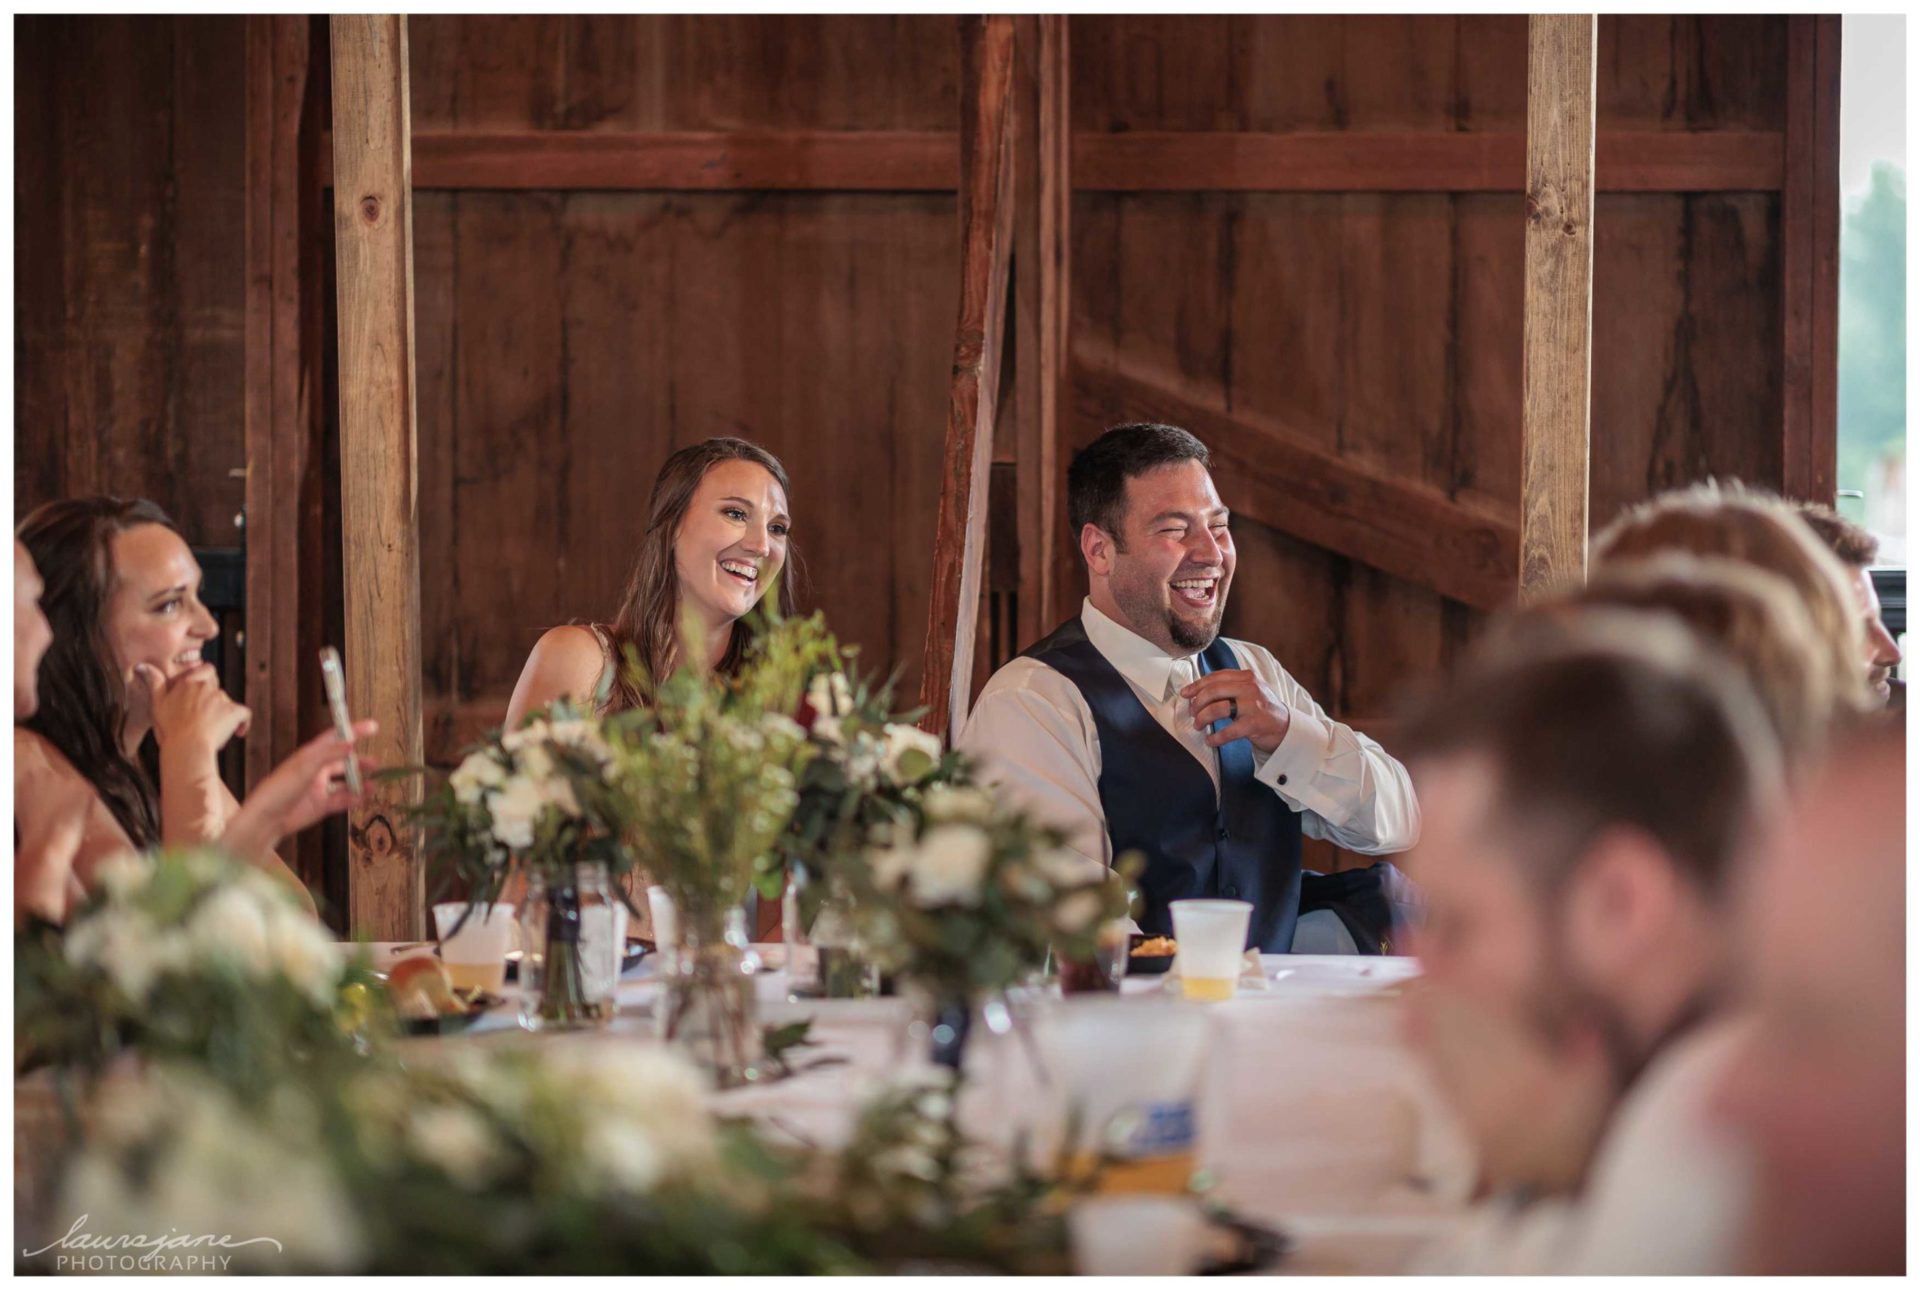 Reception at Hay Loft Barn Wedding